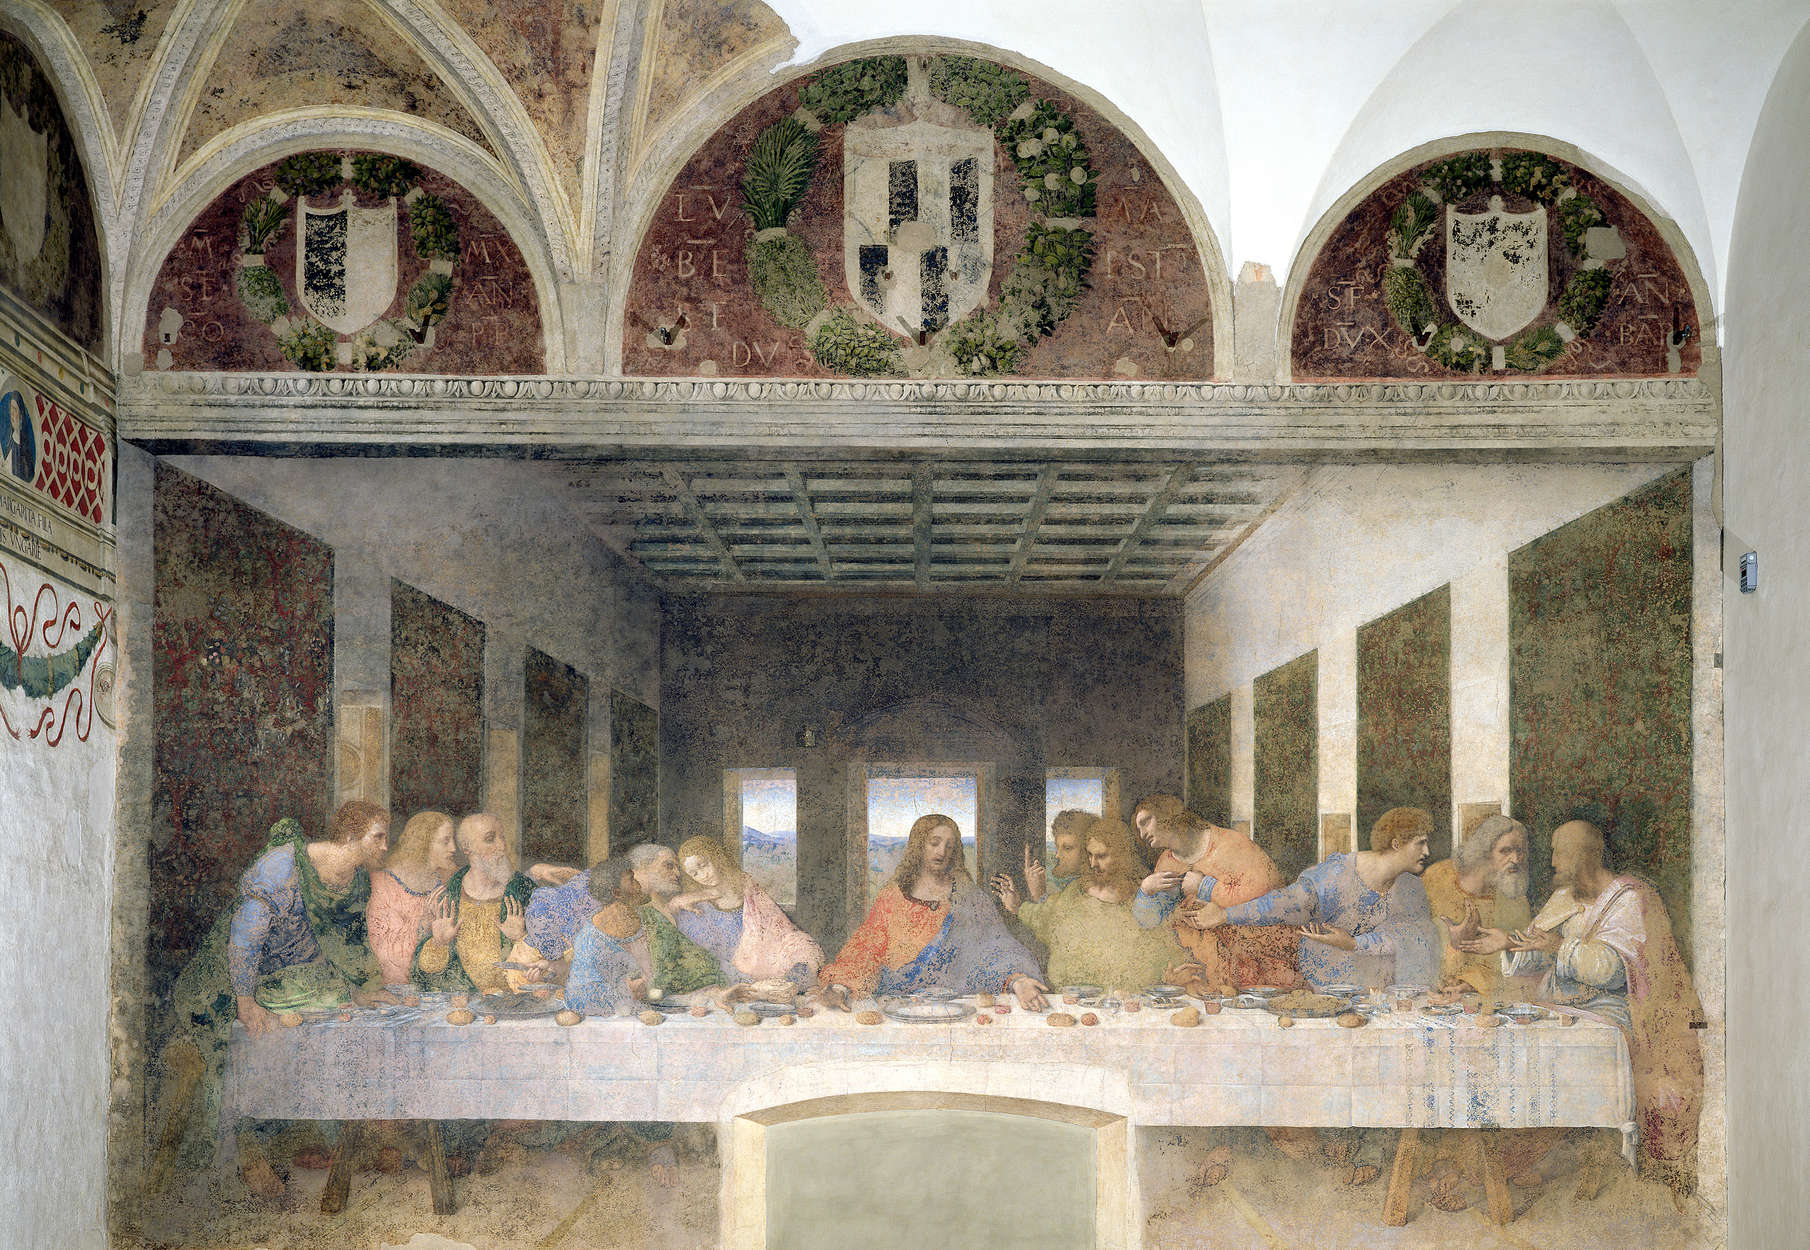             Fototapete "Das letzte Abendmahl" von Leonardo da Vinci
        